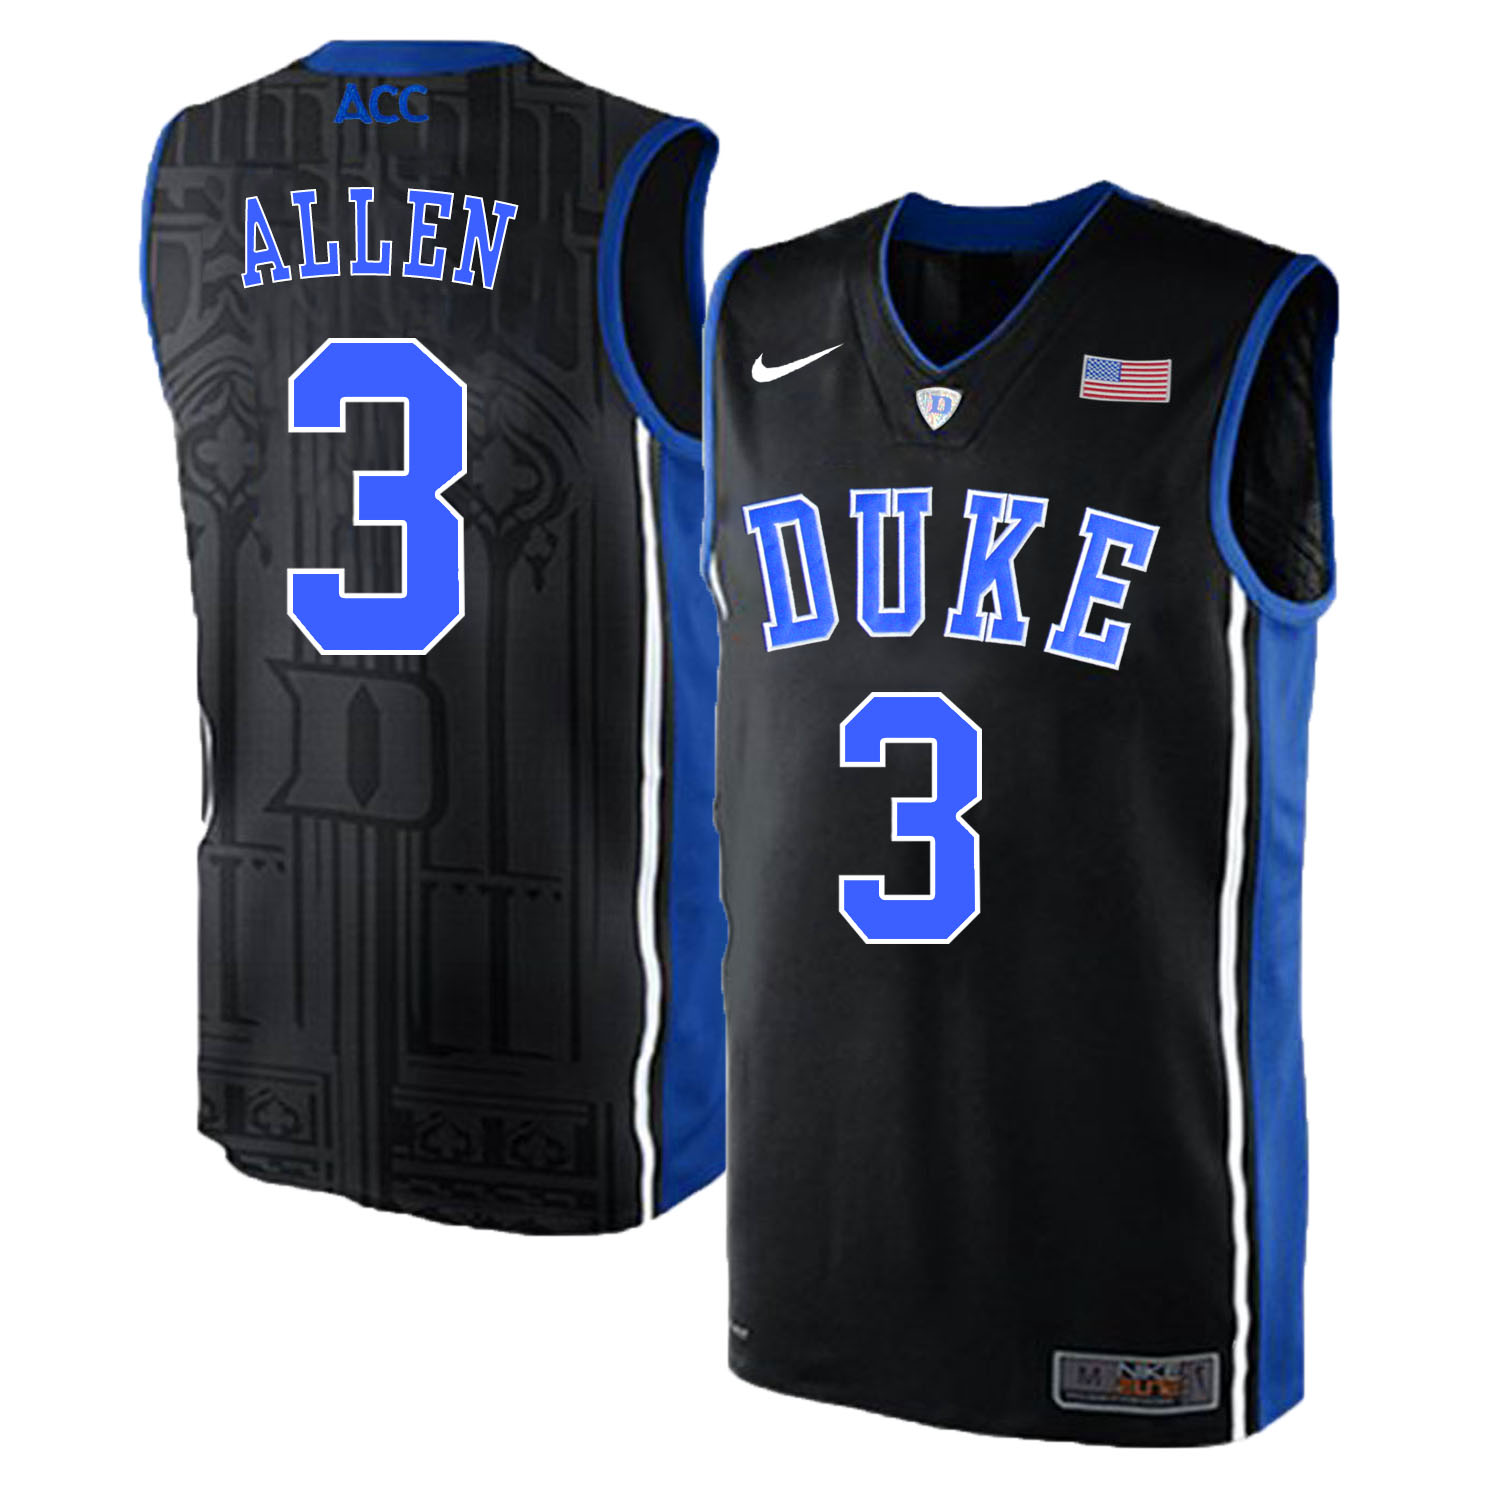 Duke Blue Devils 3 Garyson Allen Black Elite Nike College Basketball Jersey